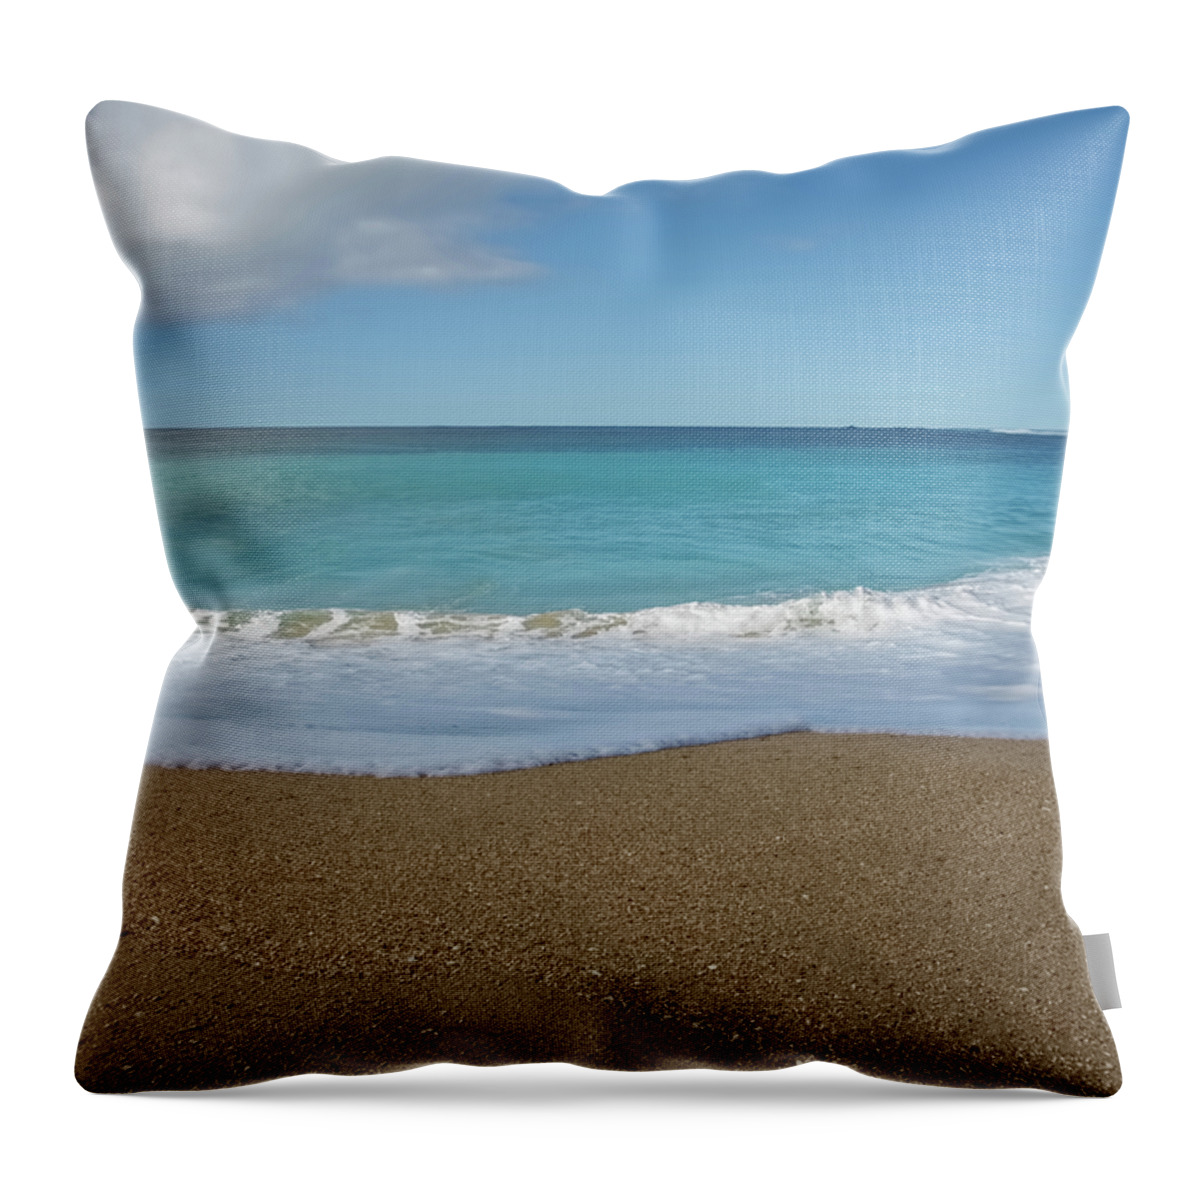 Blue Ocean Water Throw Pillow featuring the photograph Blue Ocean Water by Steven Michael